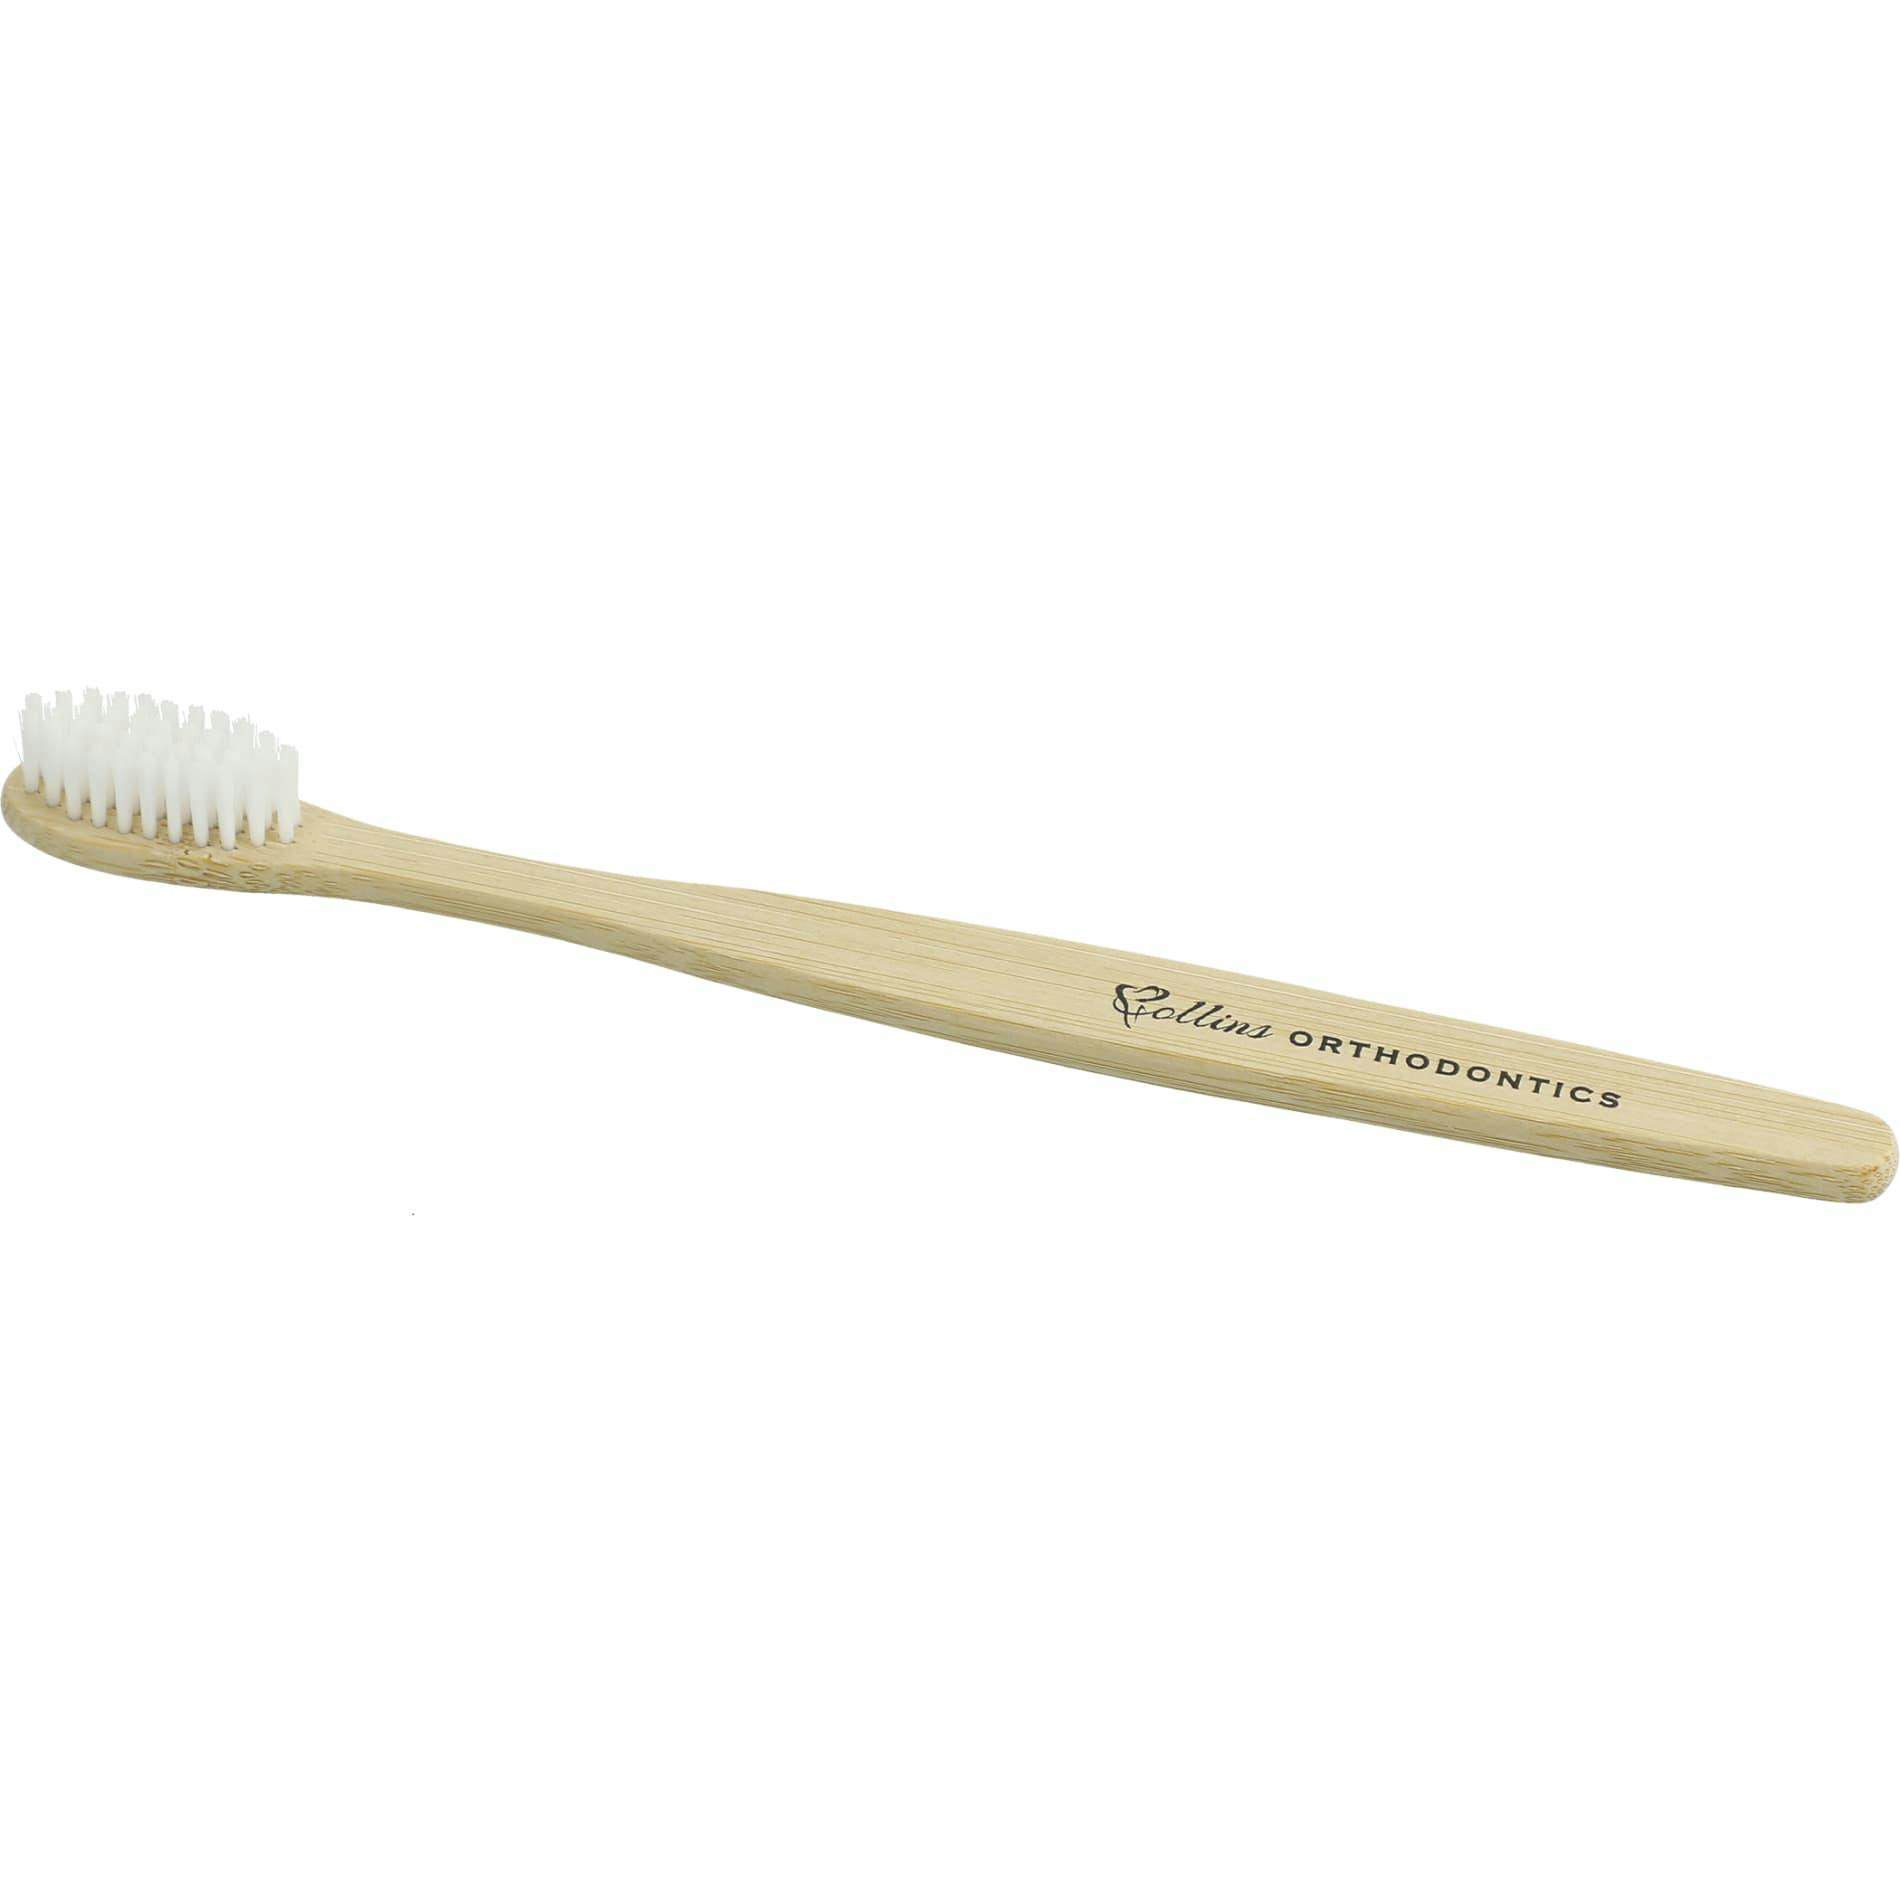 Bamboo Toothbrush - additional Image 3